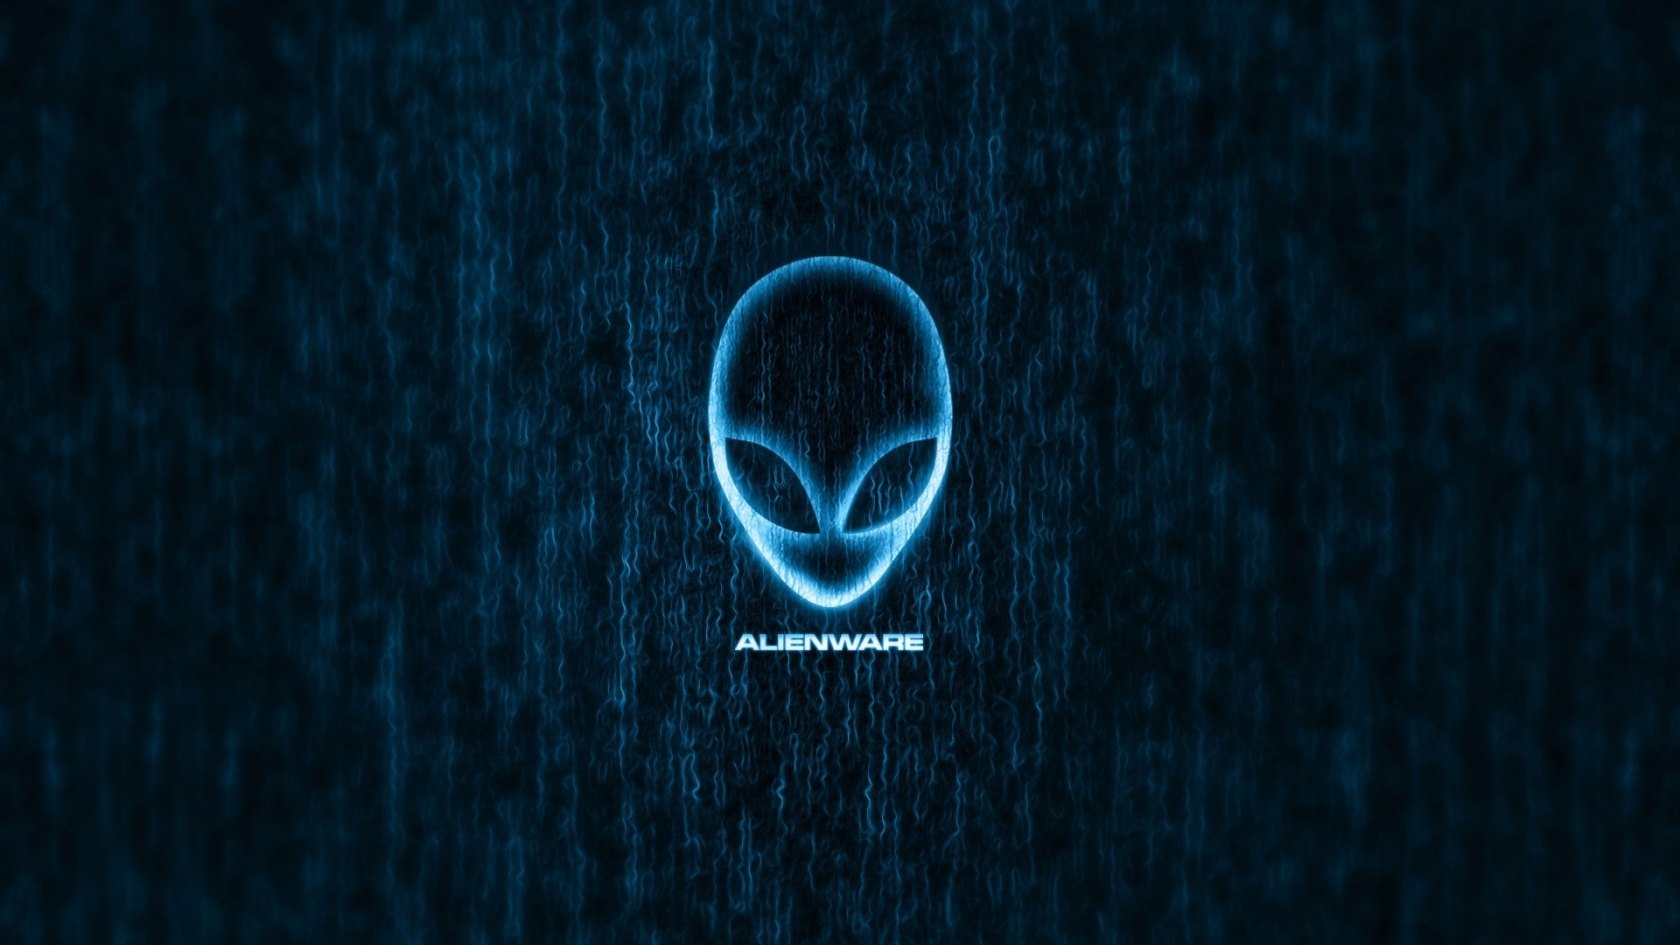 Alienware Company Logo for 1680 x 945 HDTV resolution